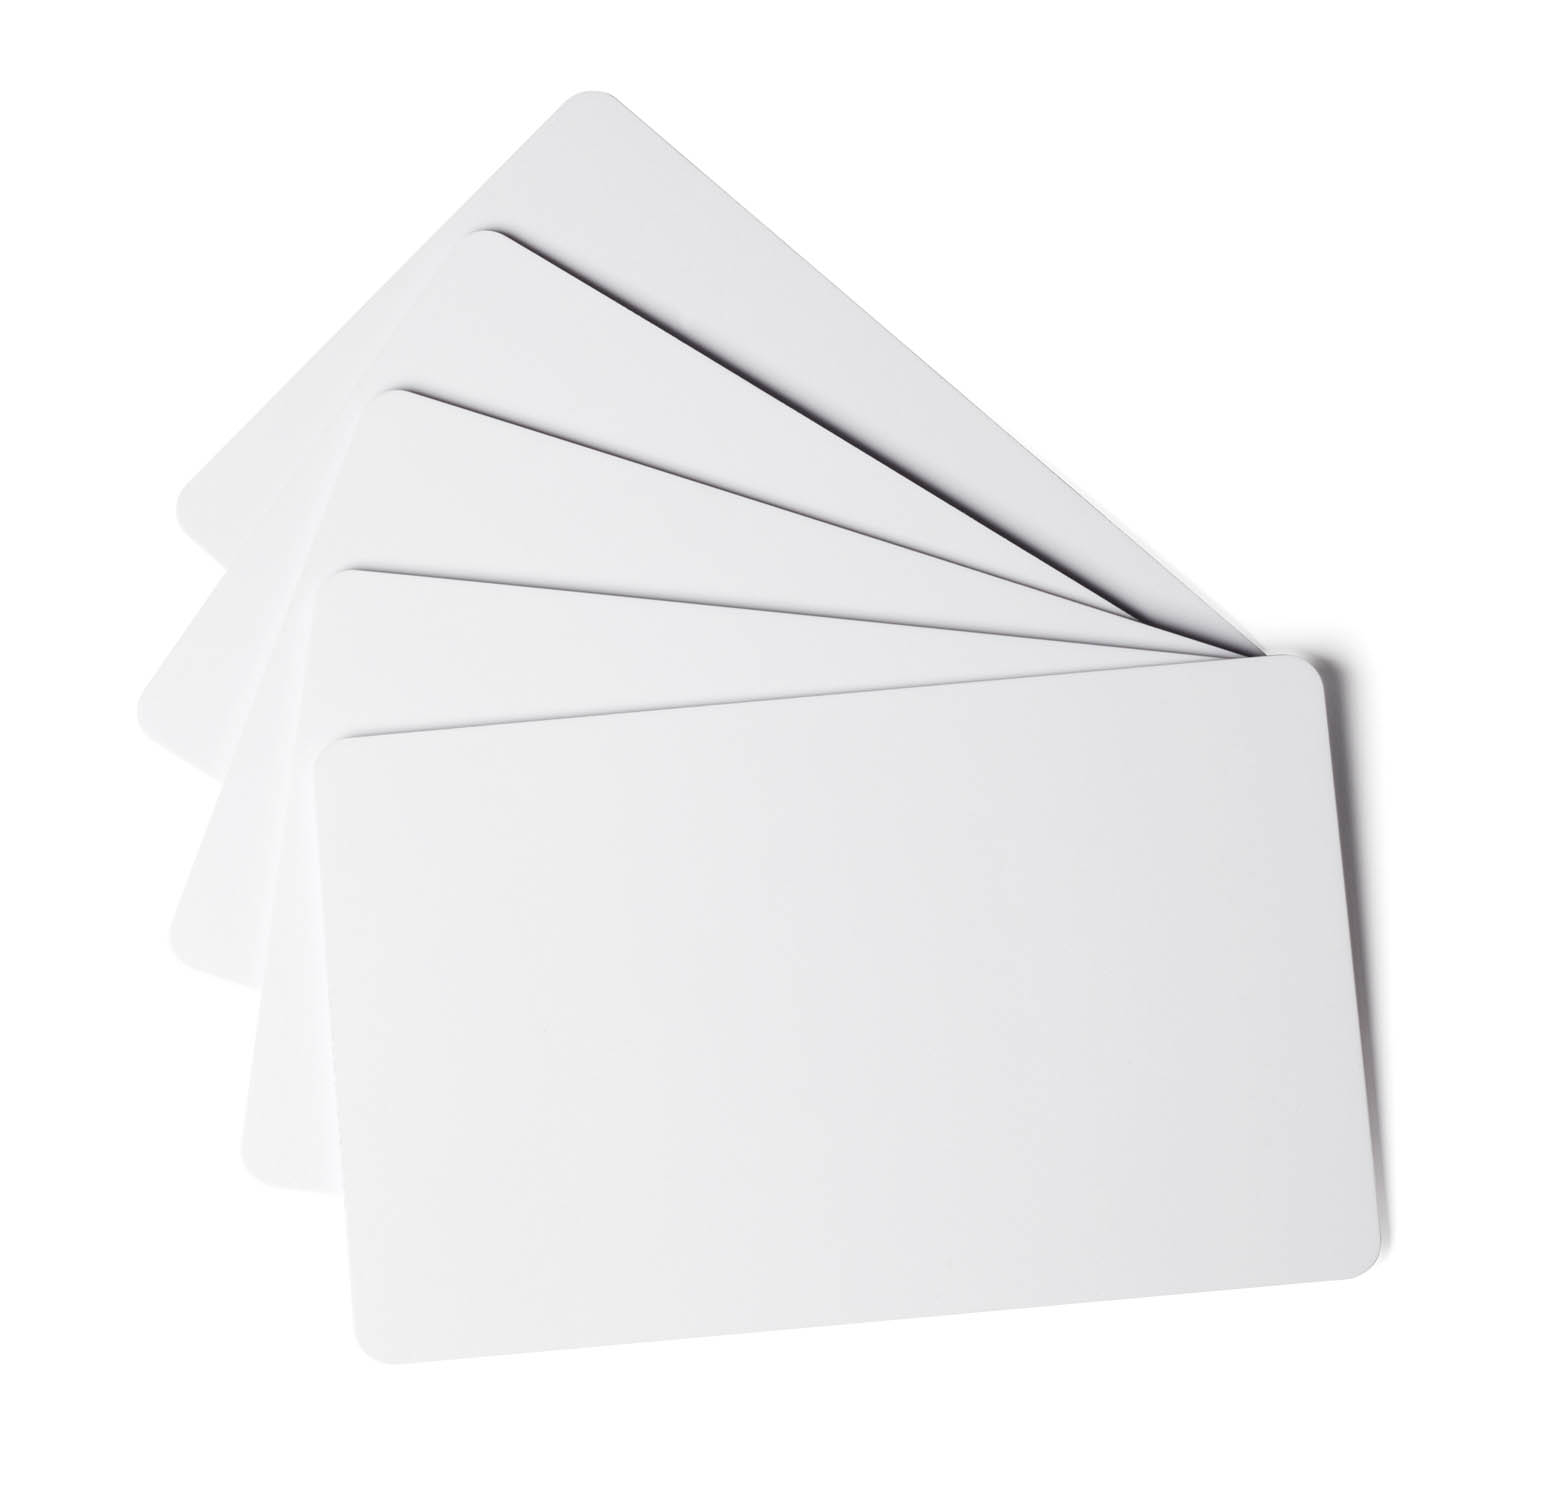 DURABLE Duracard Light Cards 891402 blanc, blanco 100 pcs.